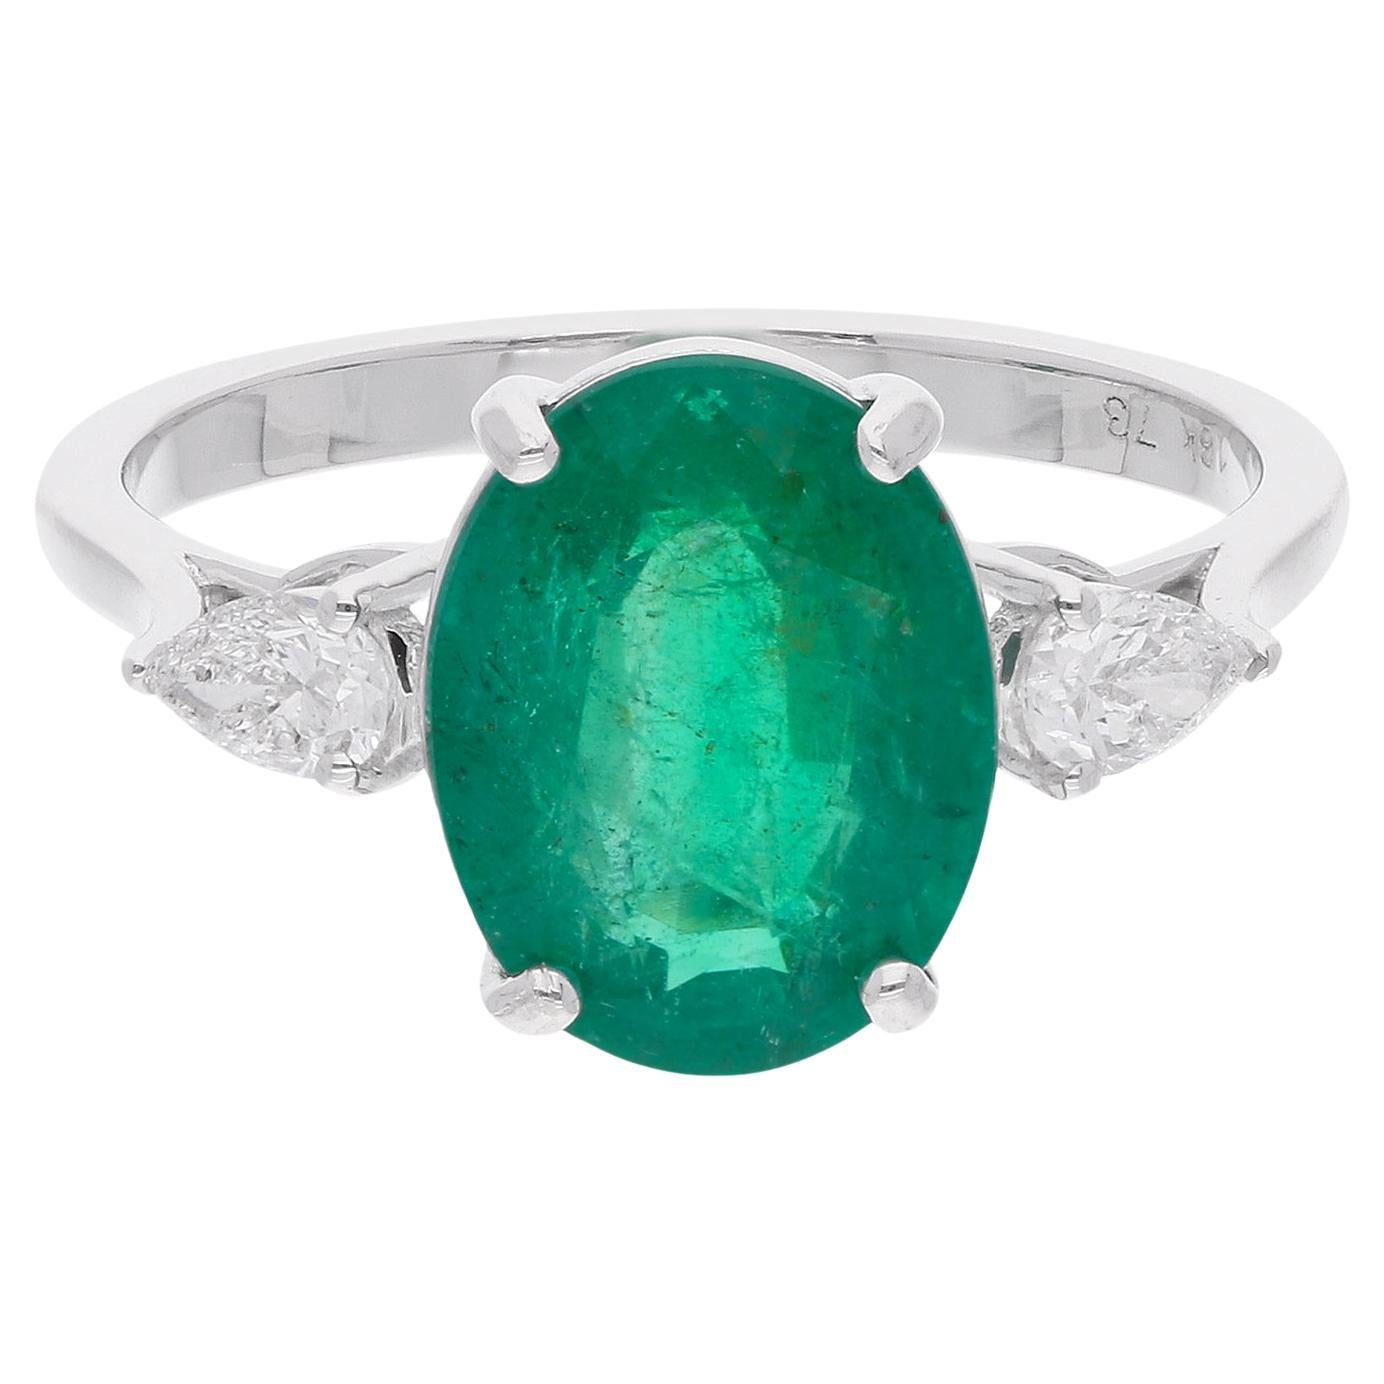 Oval Zambian Emerald Gemstone Cocktail Ring Diamond 18 Karat White Gold Jewelry